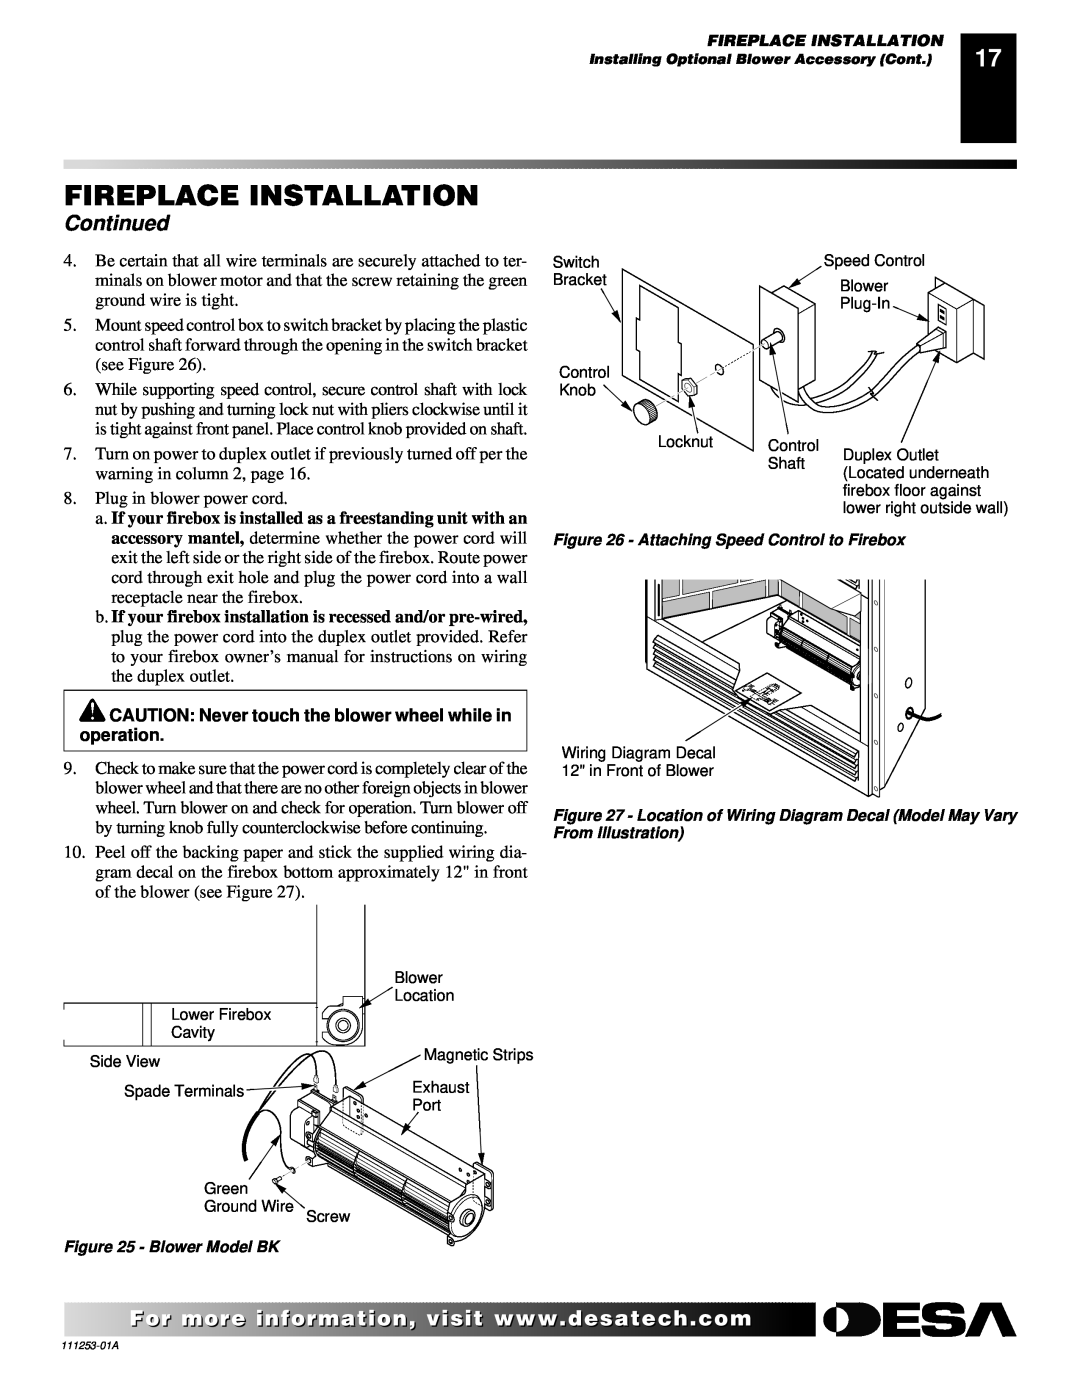 Desa (V)V36EPA(1), (V)V36ENA(1) installation manual Fireplace Installation, Continued, Plug in blower power cord 